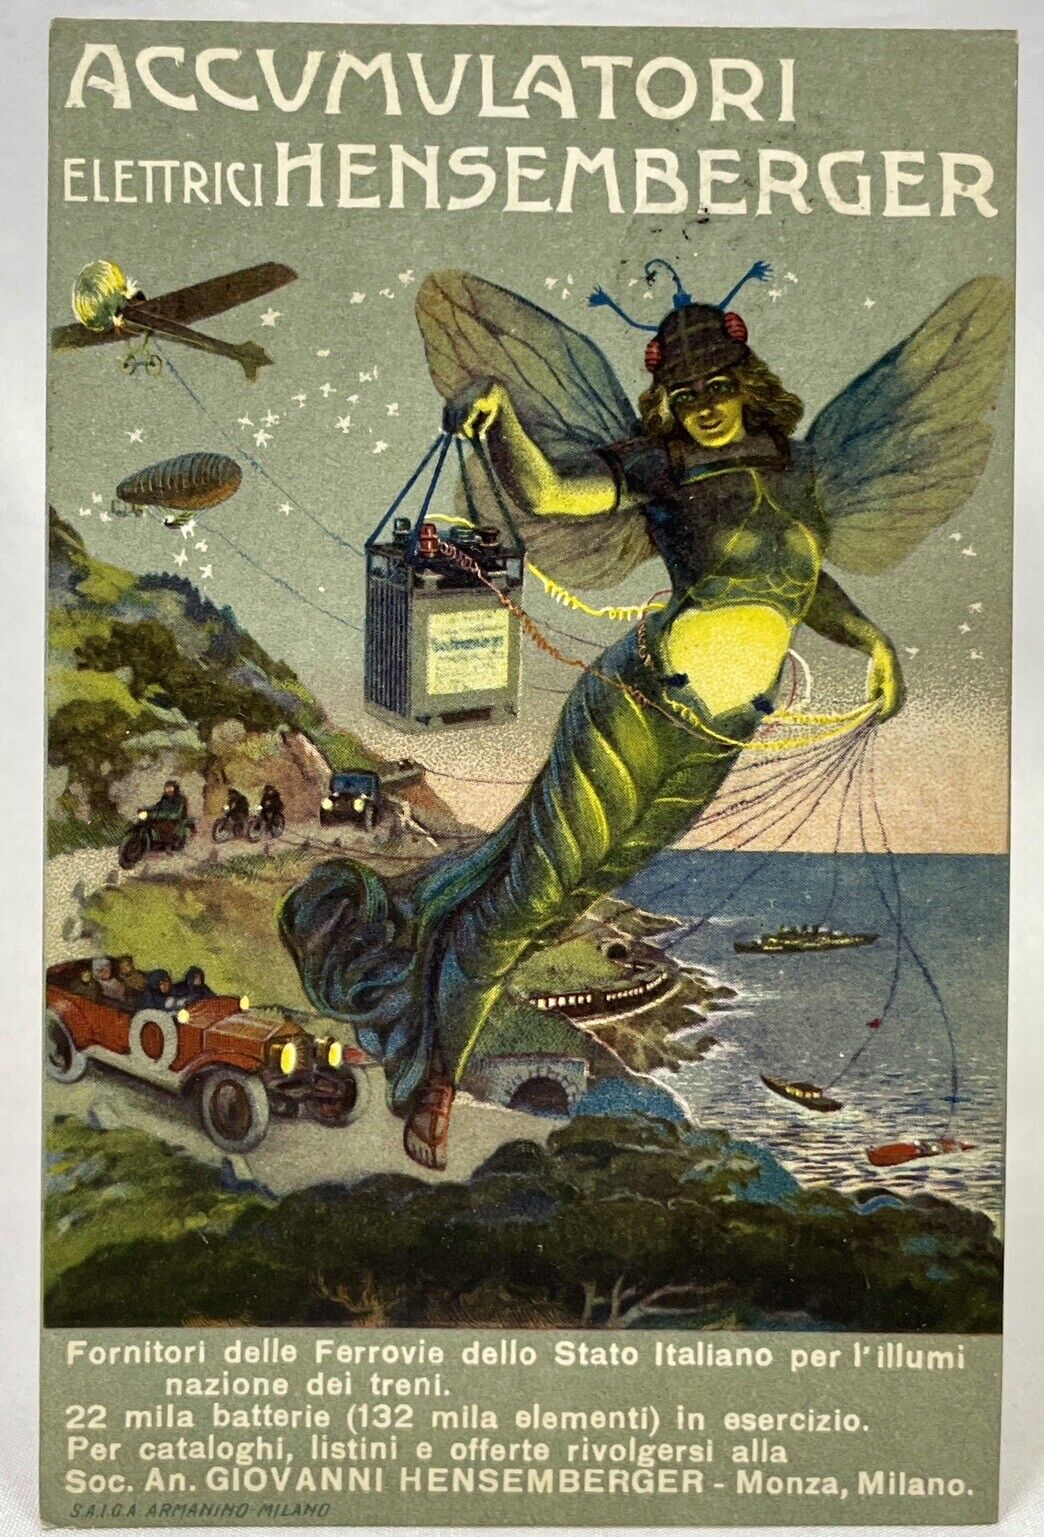 Italian Battery Advert Litho Postcard | Electric Nouveau Fairy | Hensemberger